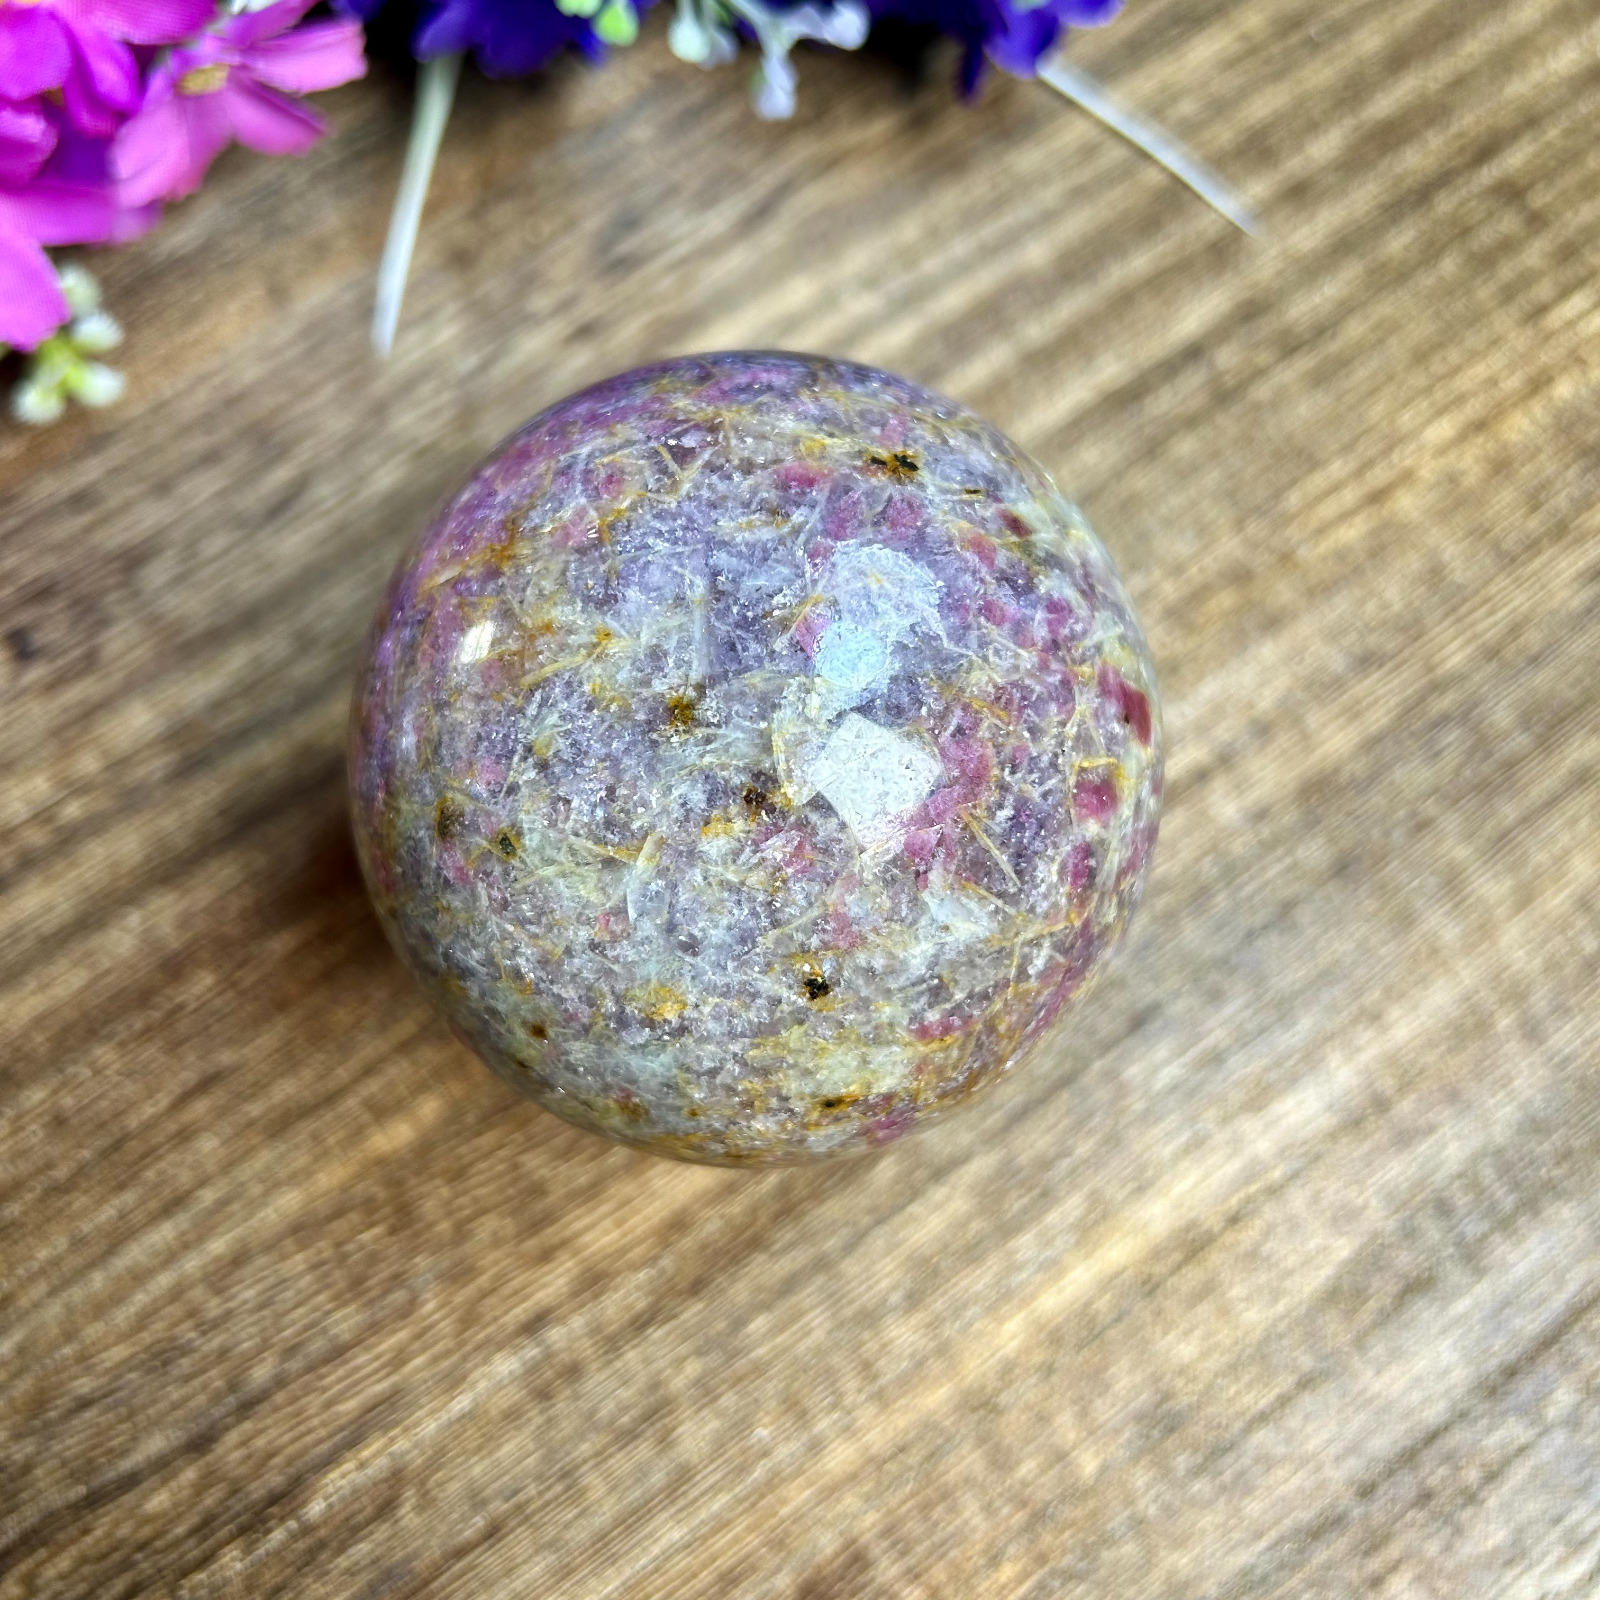 70mm 525g Natural Unicorn Stone Sphere Ball Quartz Crystal Healing